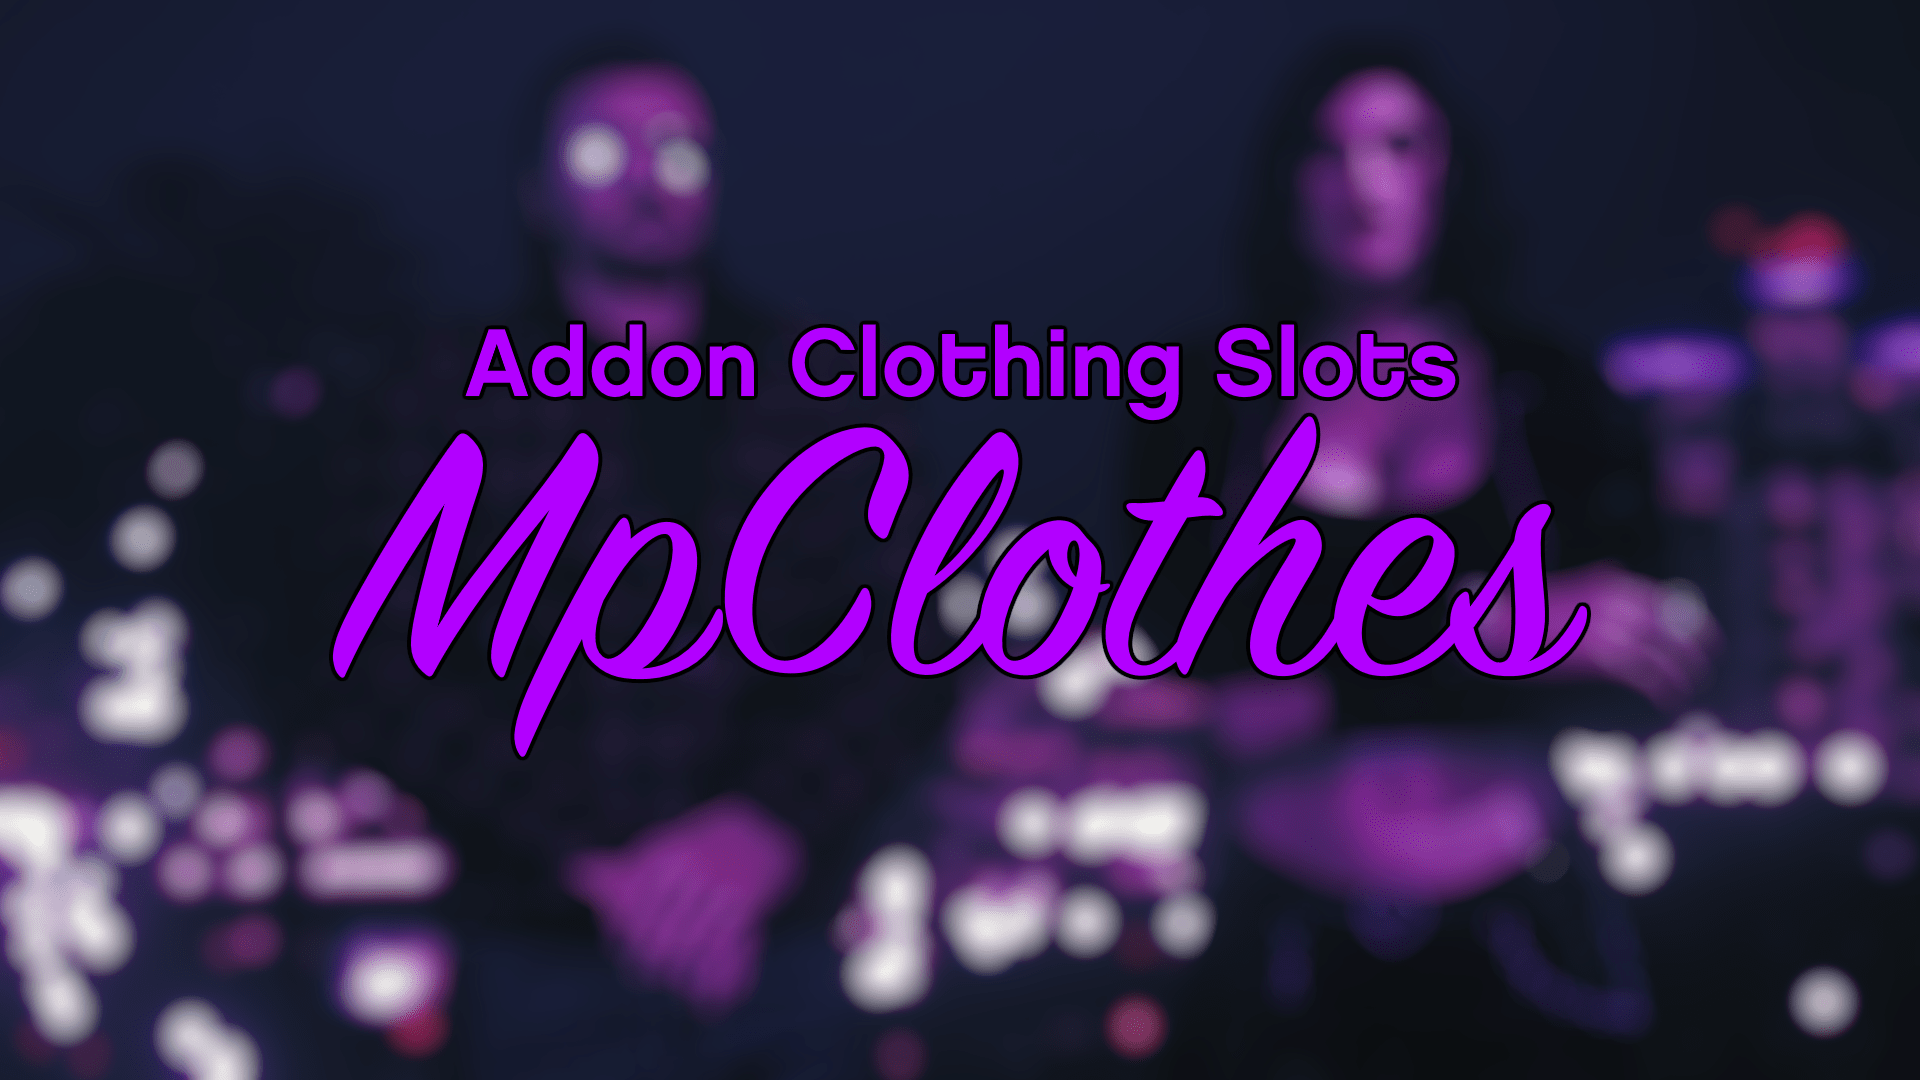 MpClothes - Addon Clothing Slots 